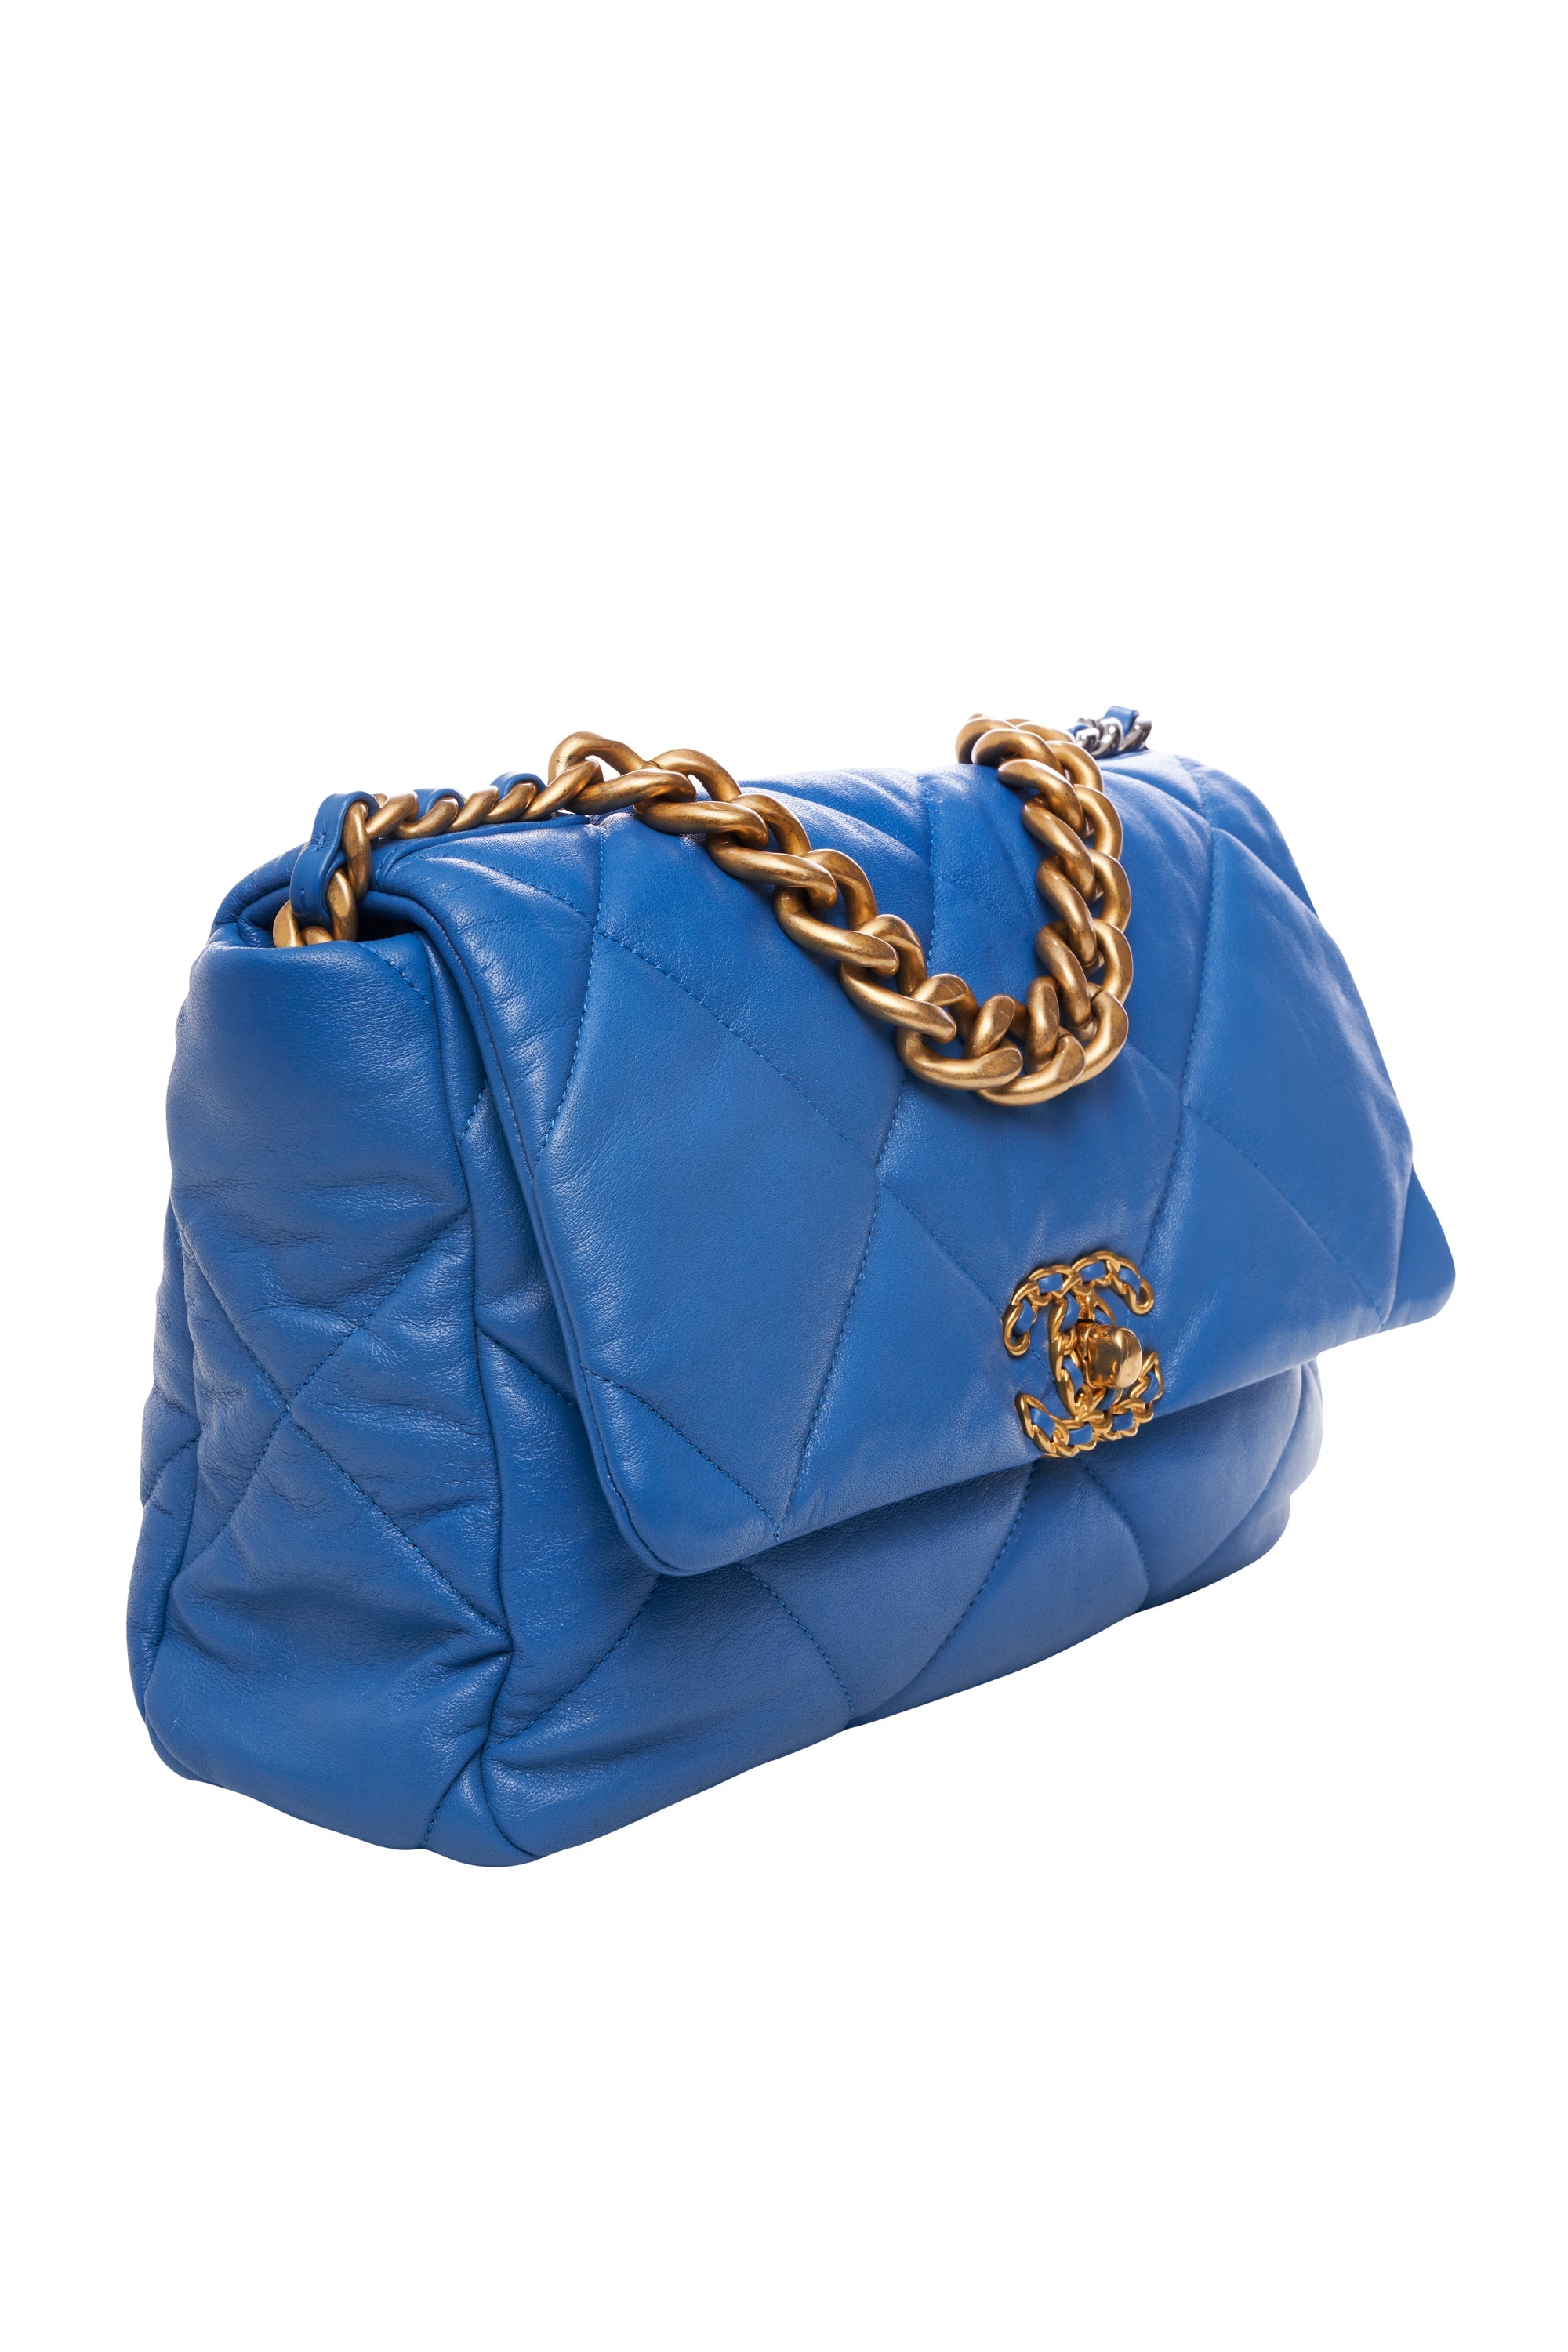 Chanel 19 Medium Blue Purse 2020-21 - Foxy Couture Carmel